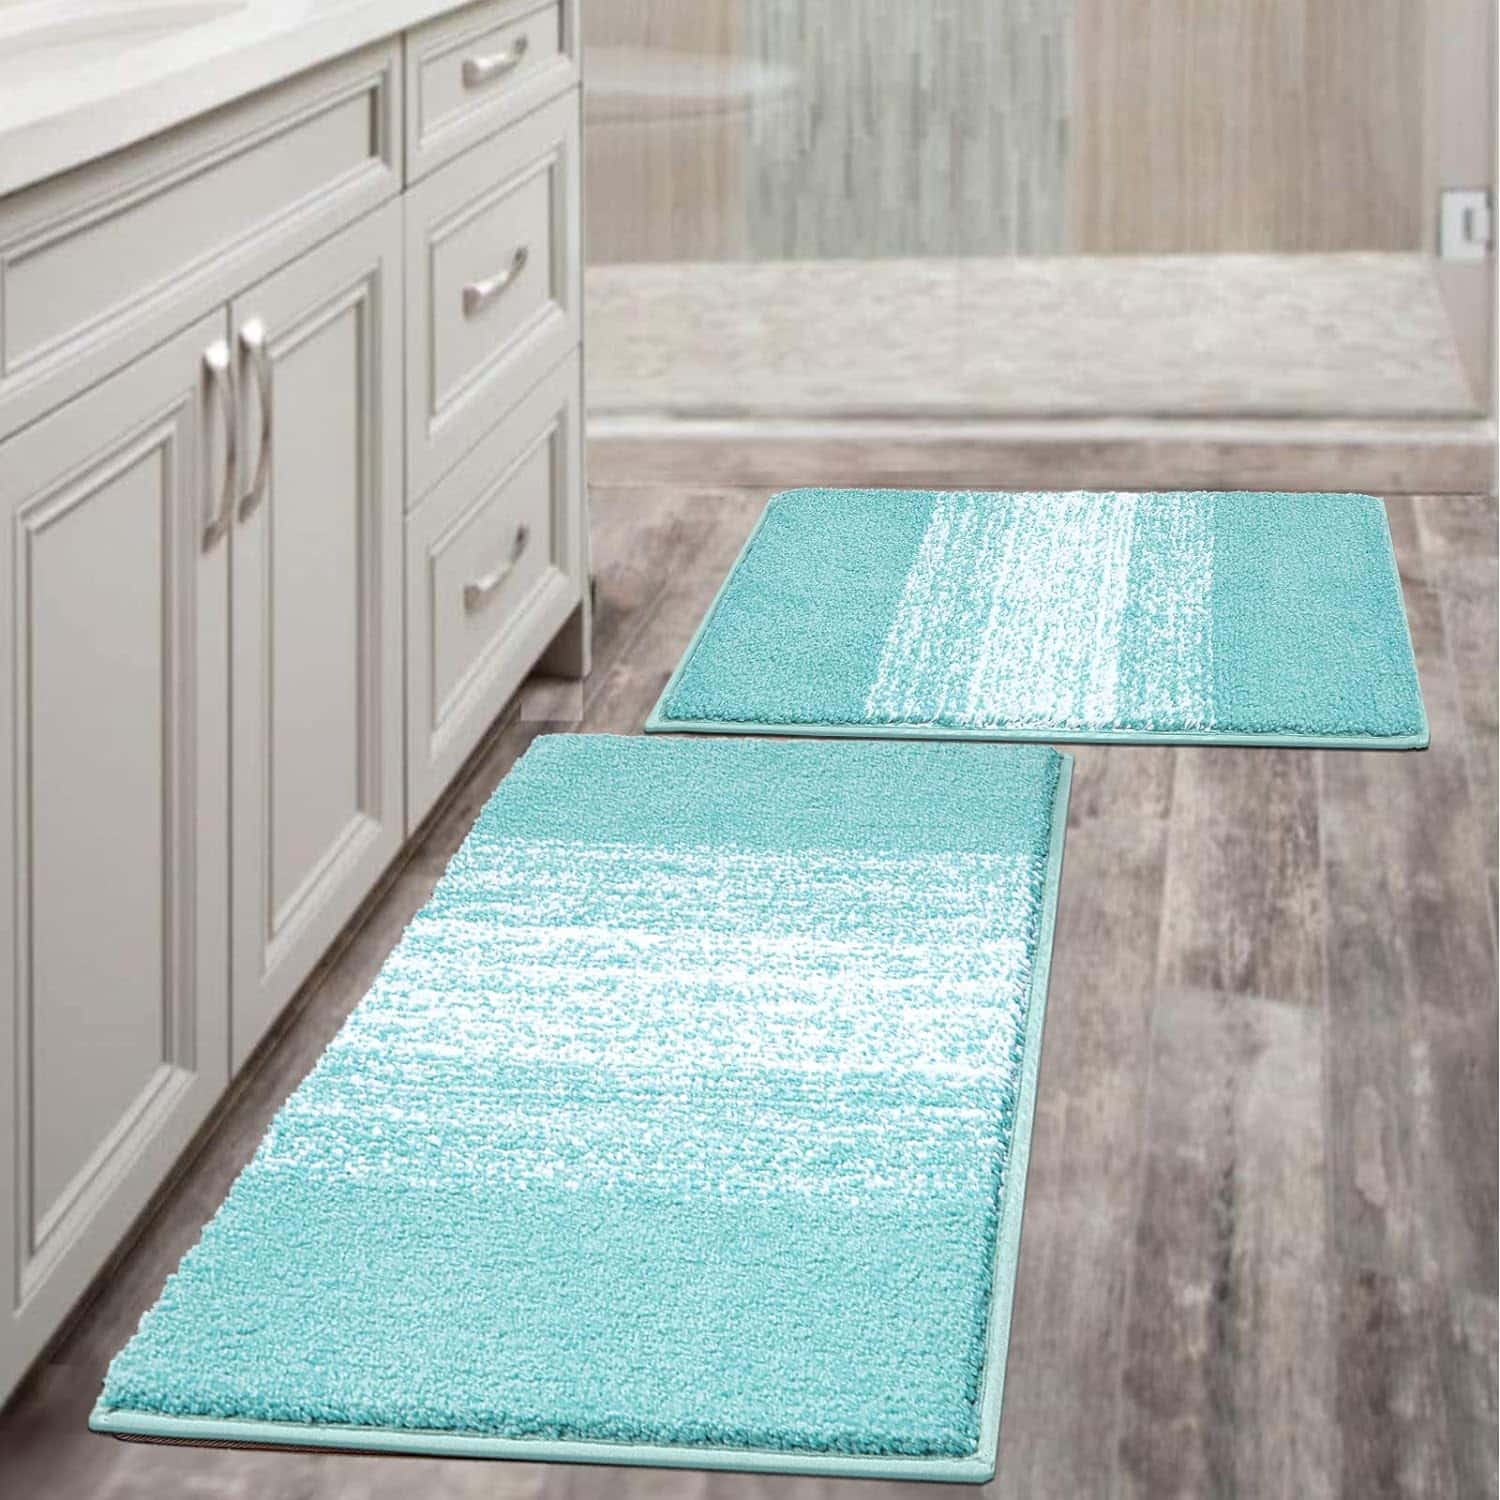 aqua blue bathroom rugs